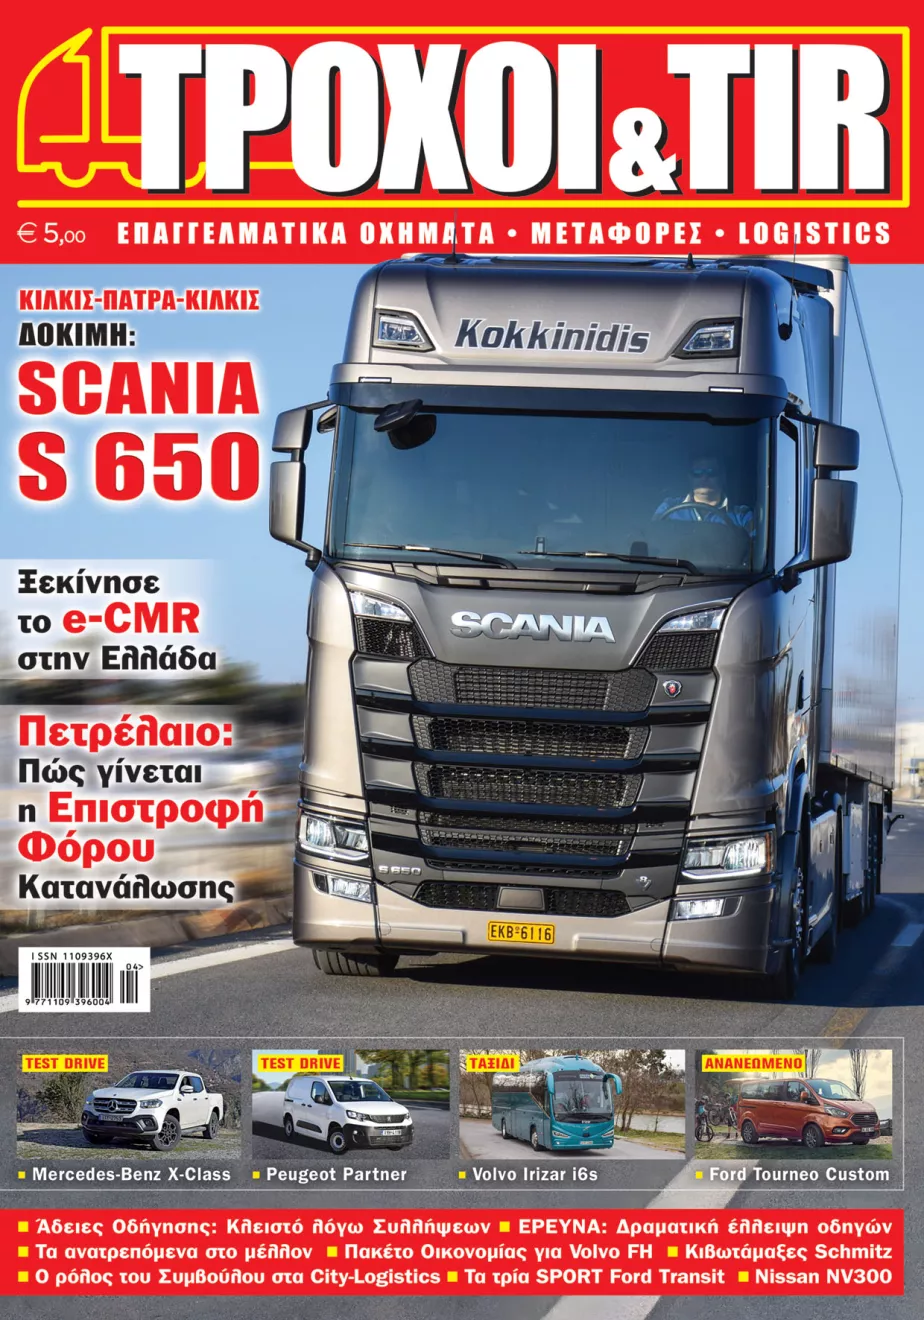 Troxoikaitir issue 372 april 2019 cover